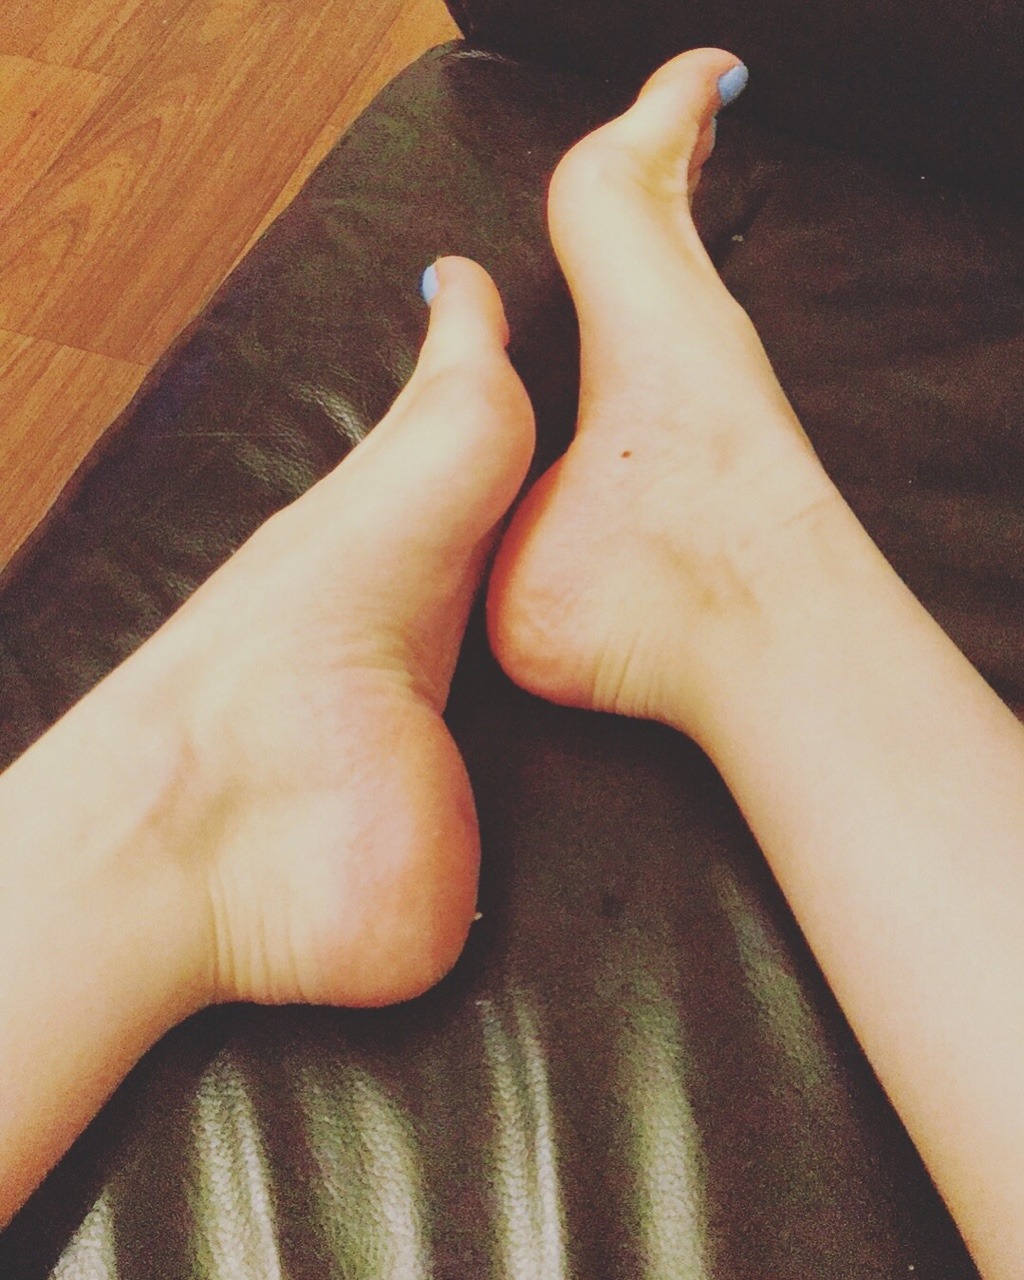 Sexy Legs And Feet Porn - My Sexy Little Feet